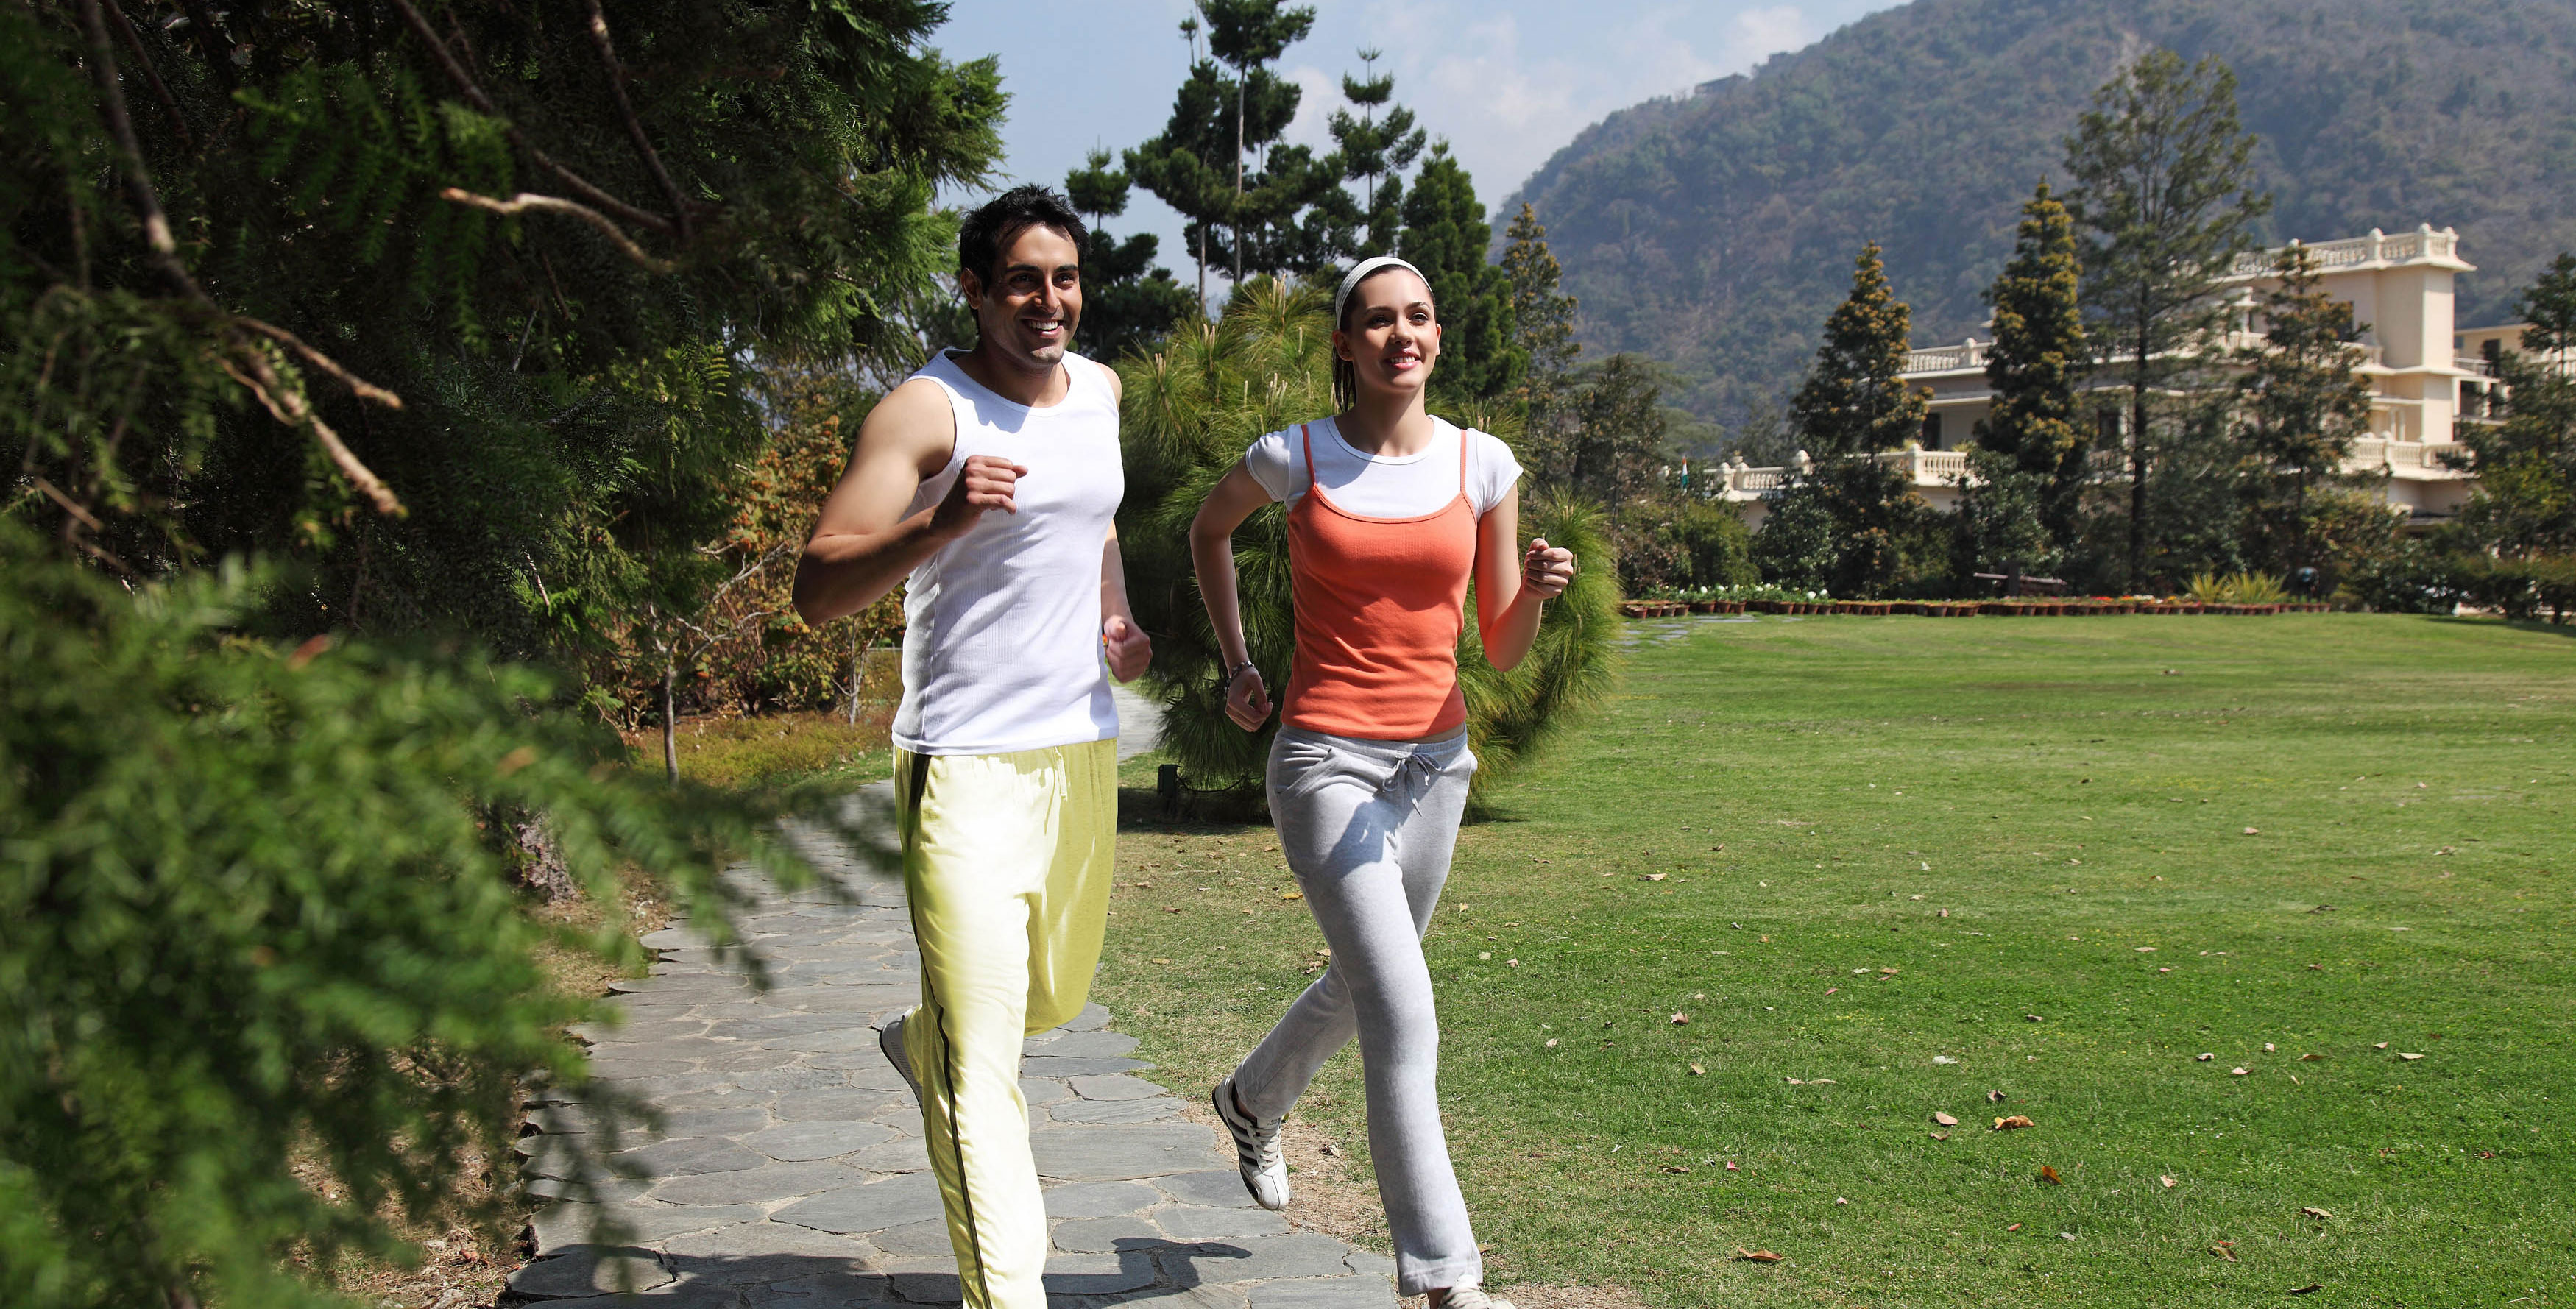 Couple jogging